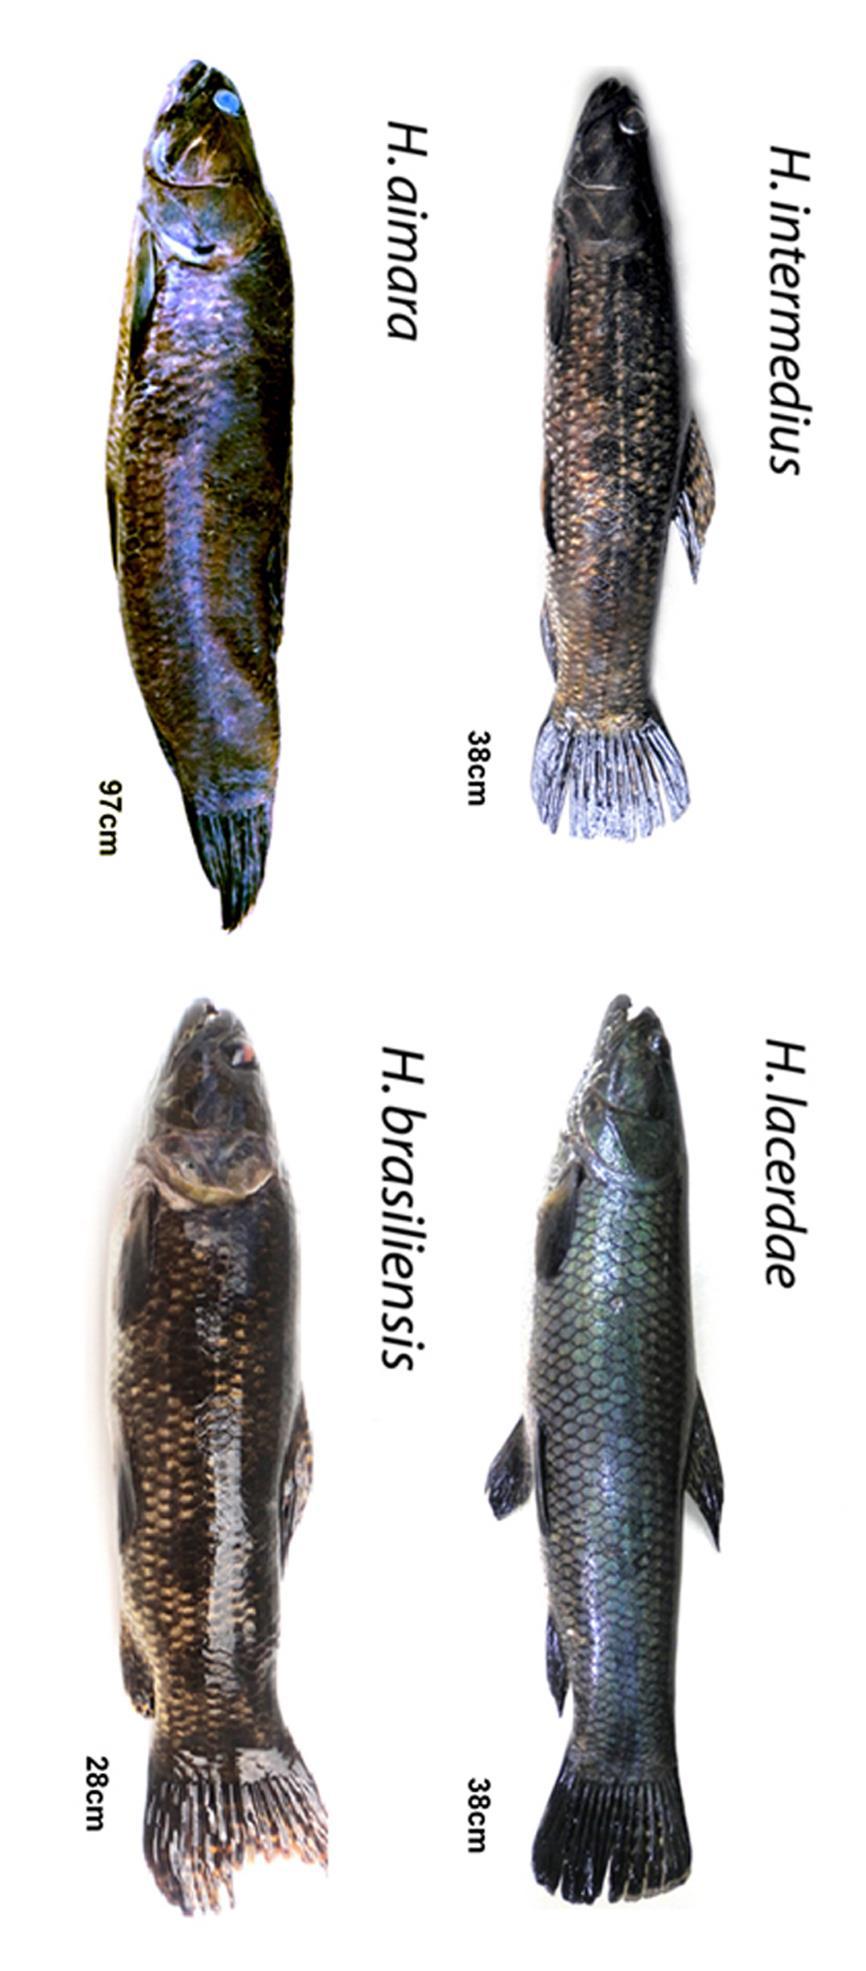 Figura 4: Fotos das espécies de